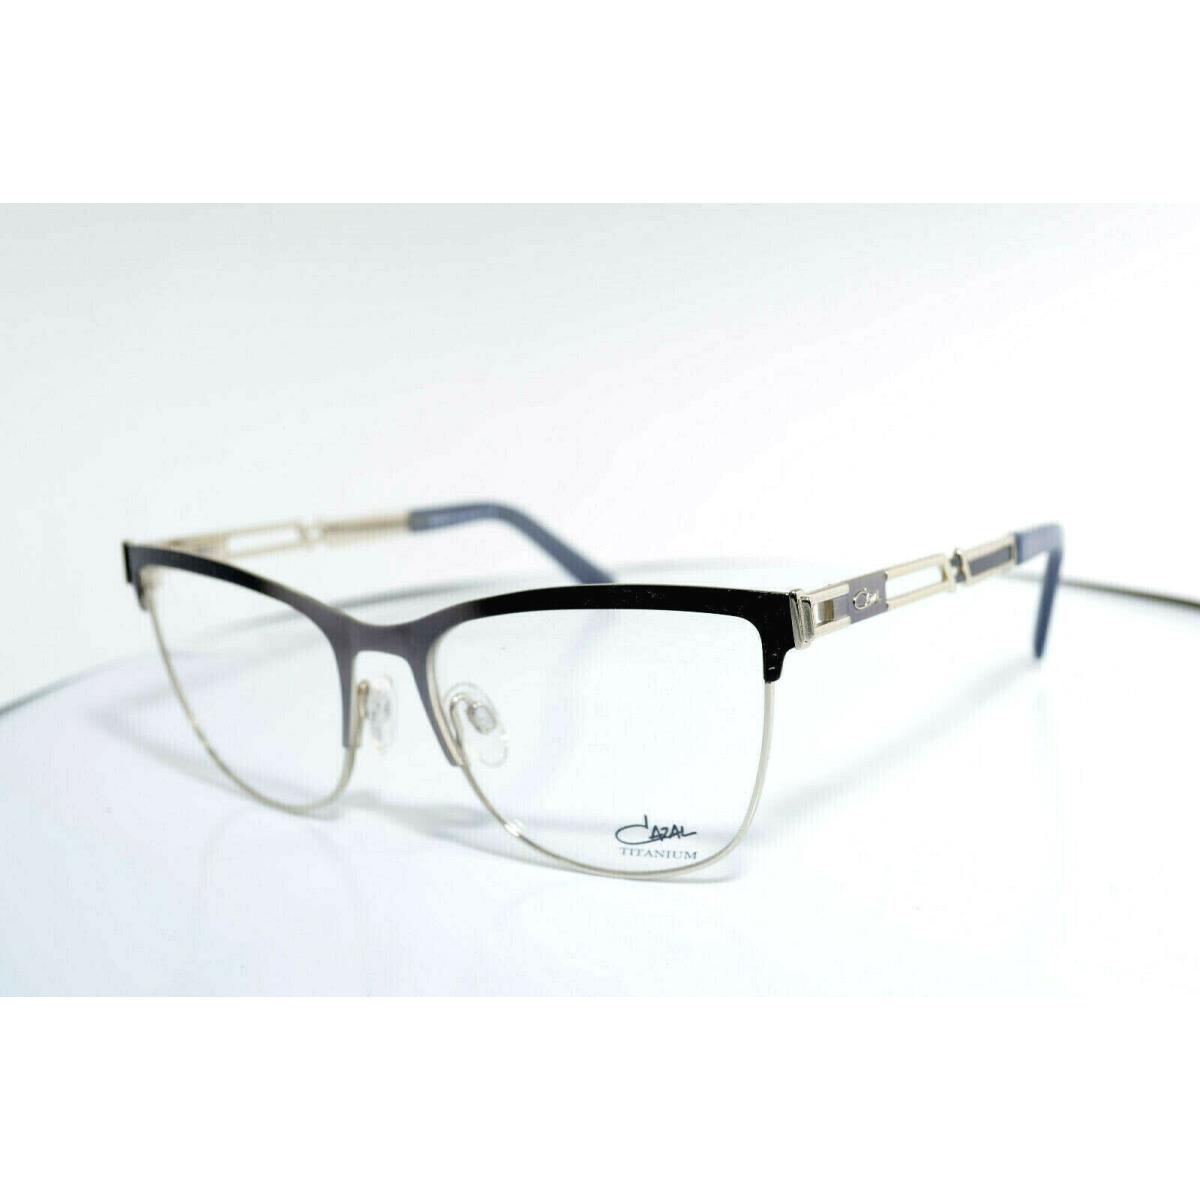 Cazal 4257 C003 Eyeglasses Frame